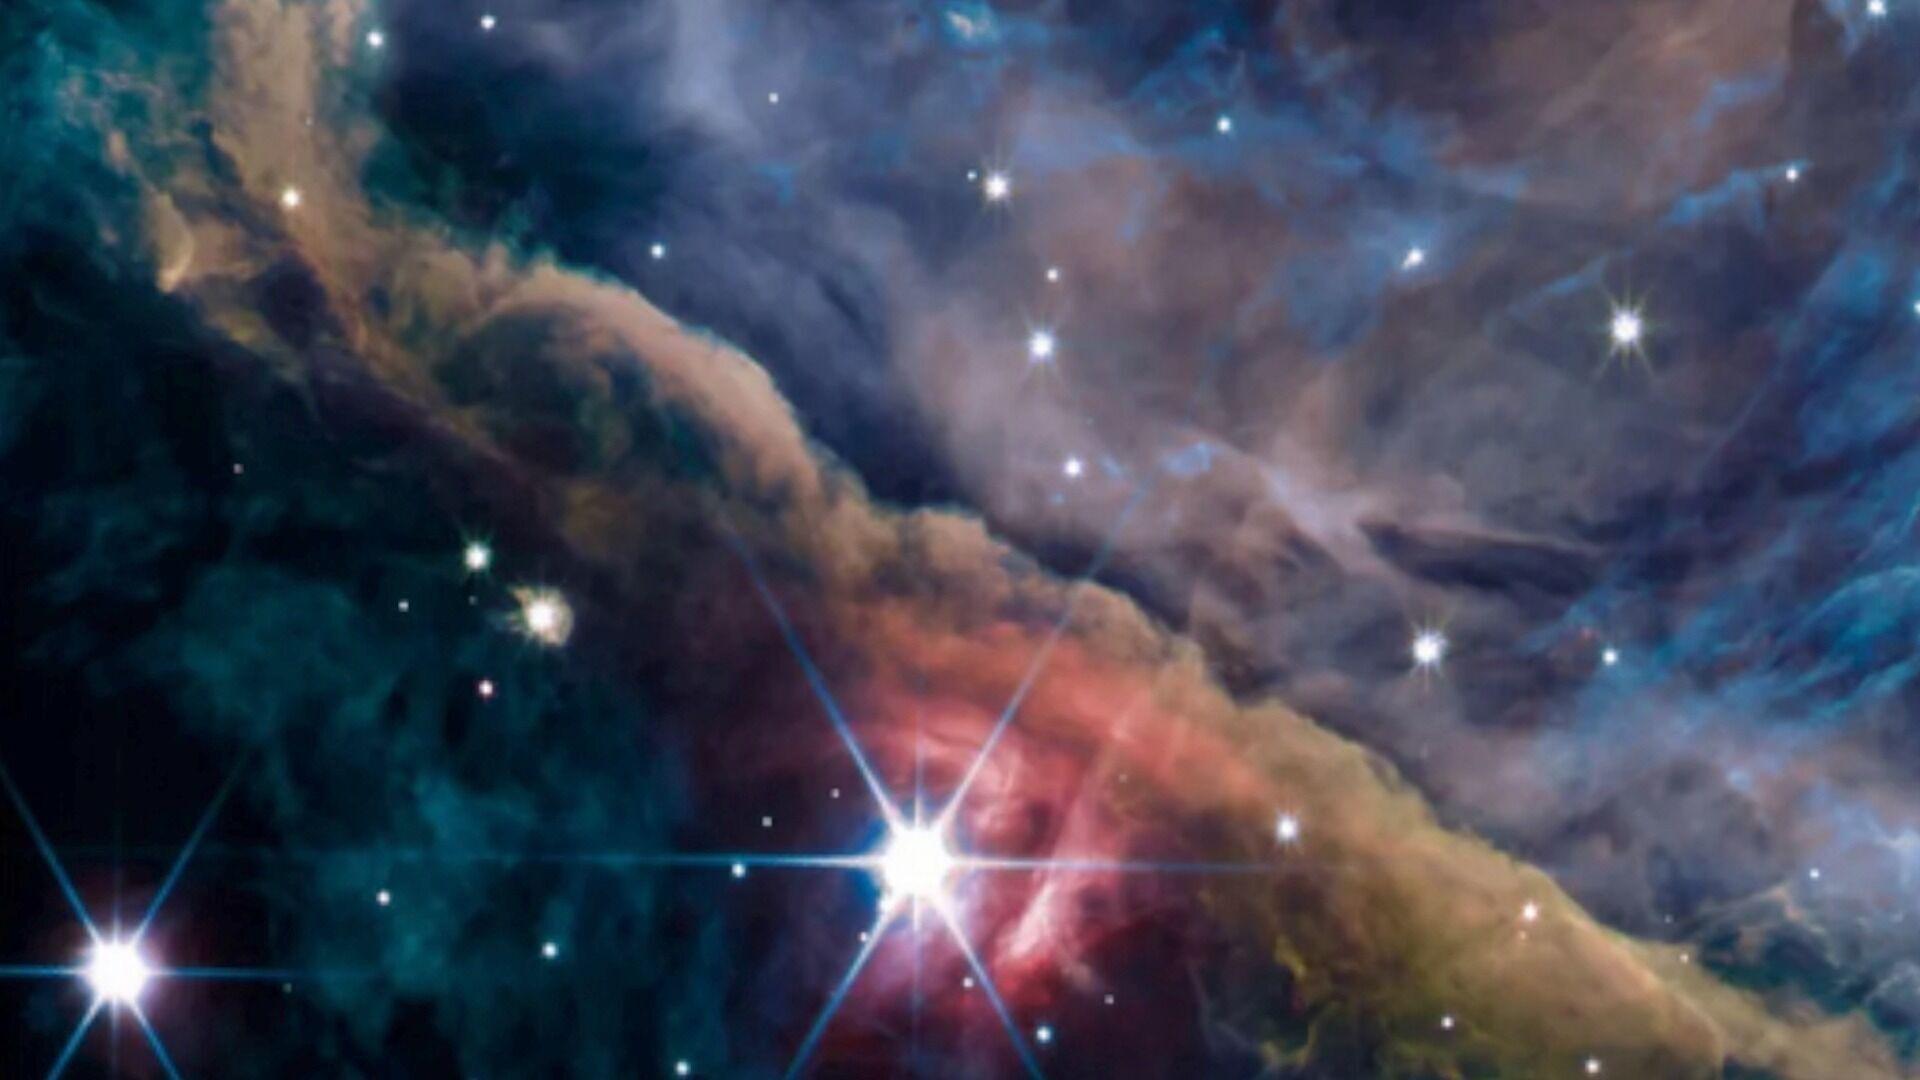 weirdest nebula